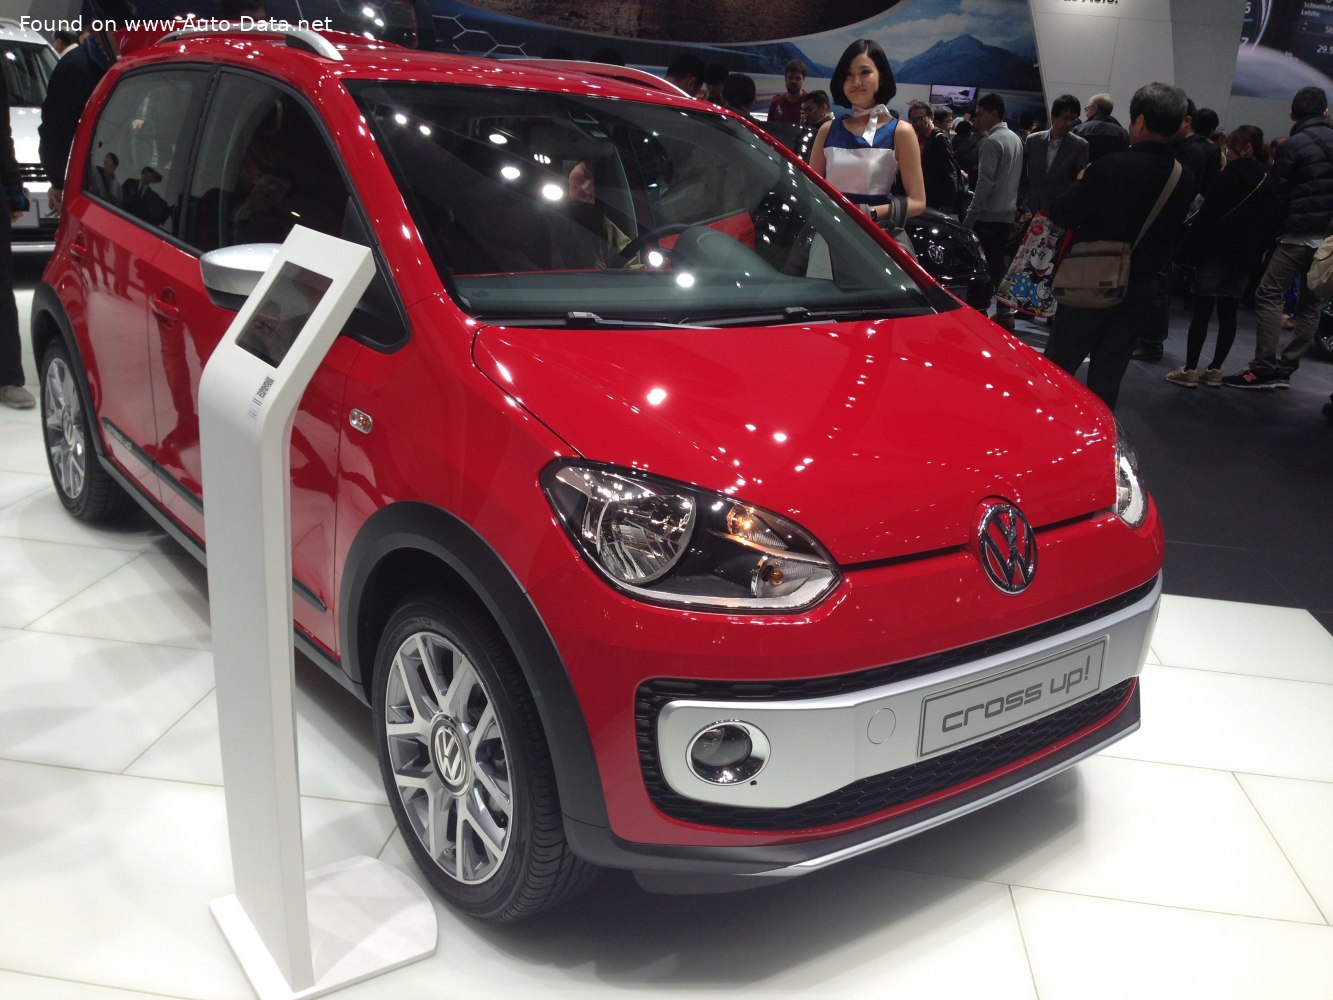 2013 Volkswagen Cross Up! 1.0 (75 Hp) | Technical specs, fuel consumption, Dimensions